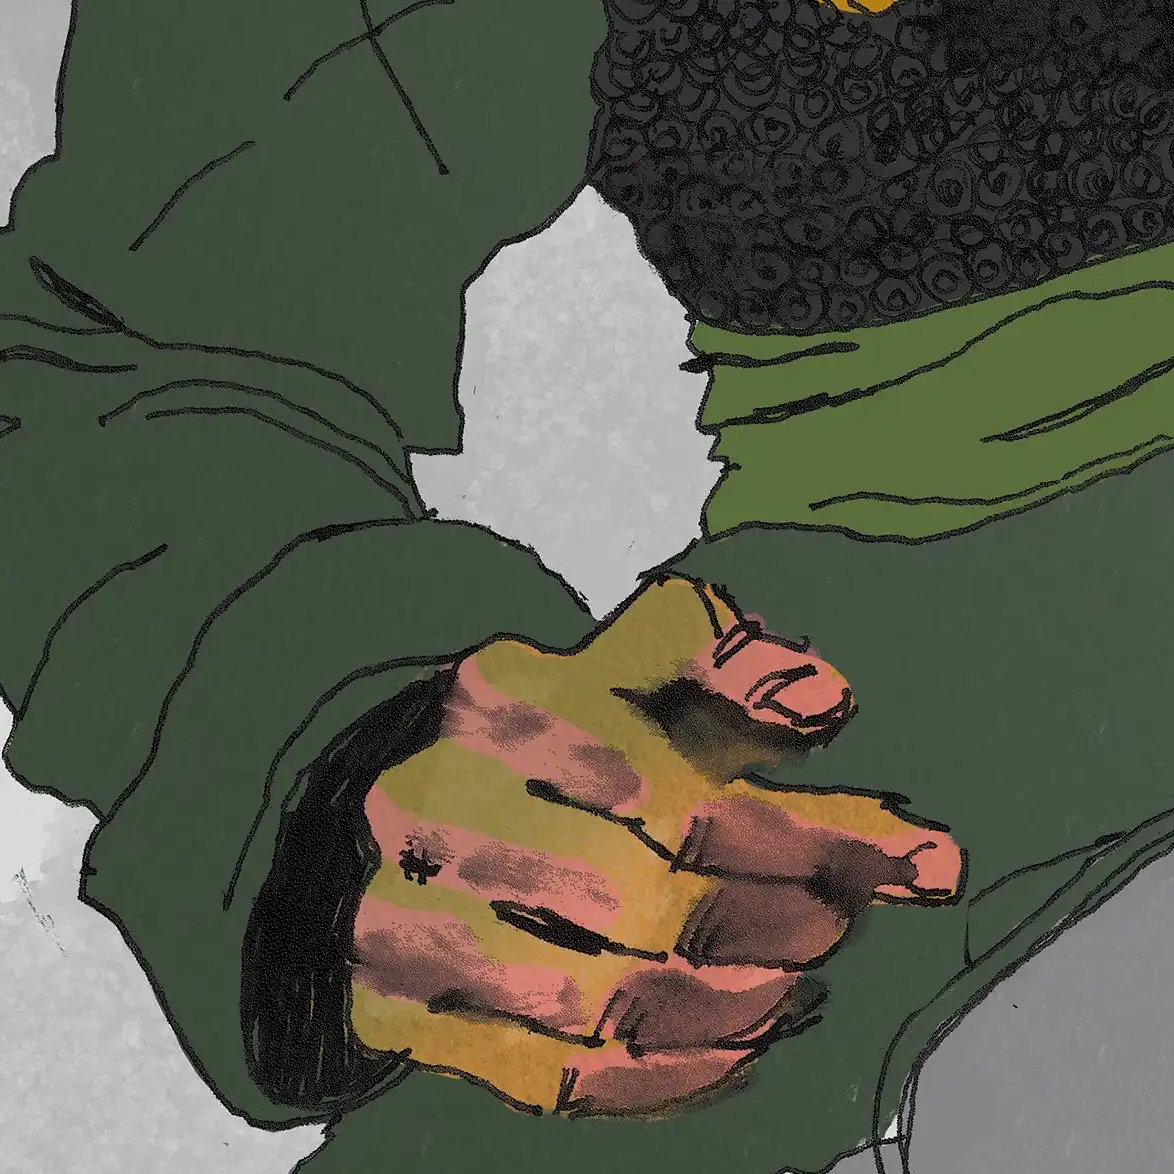 Illustration of Green Knight - detail of hand